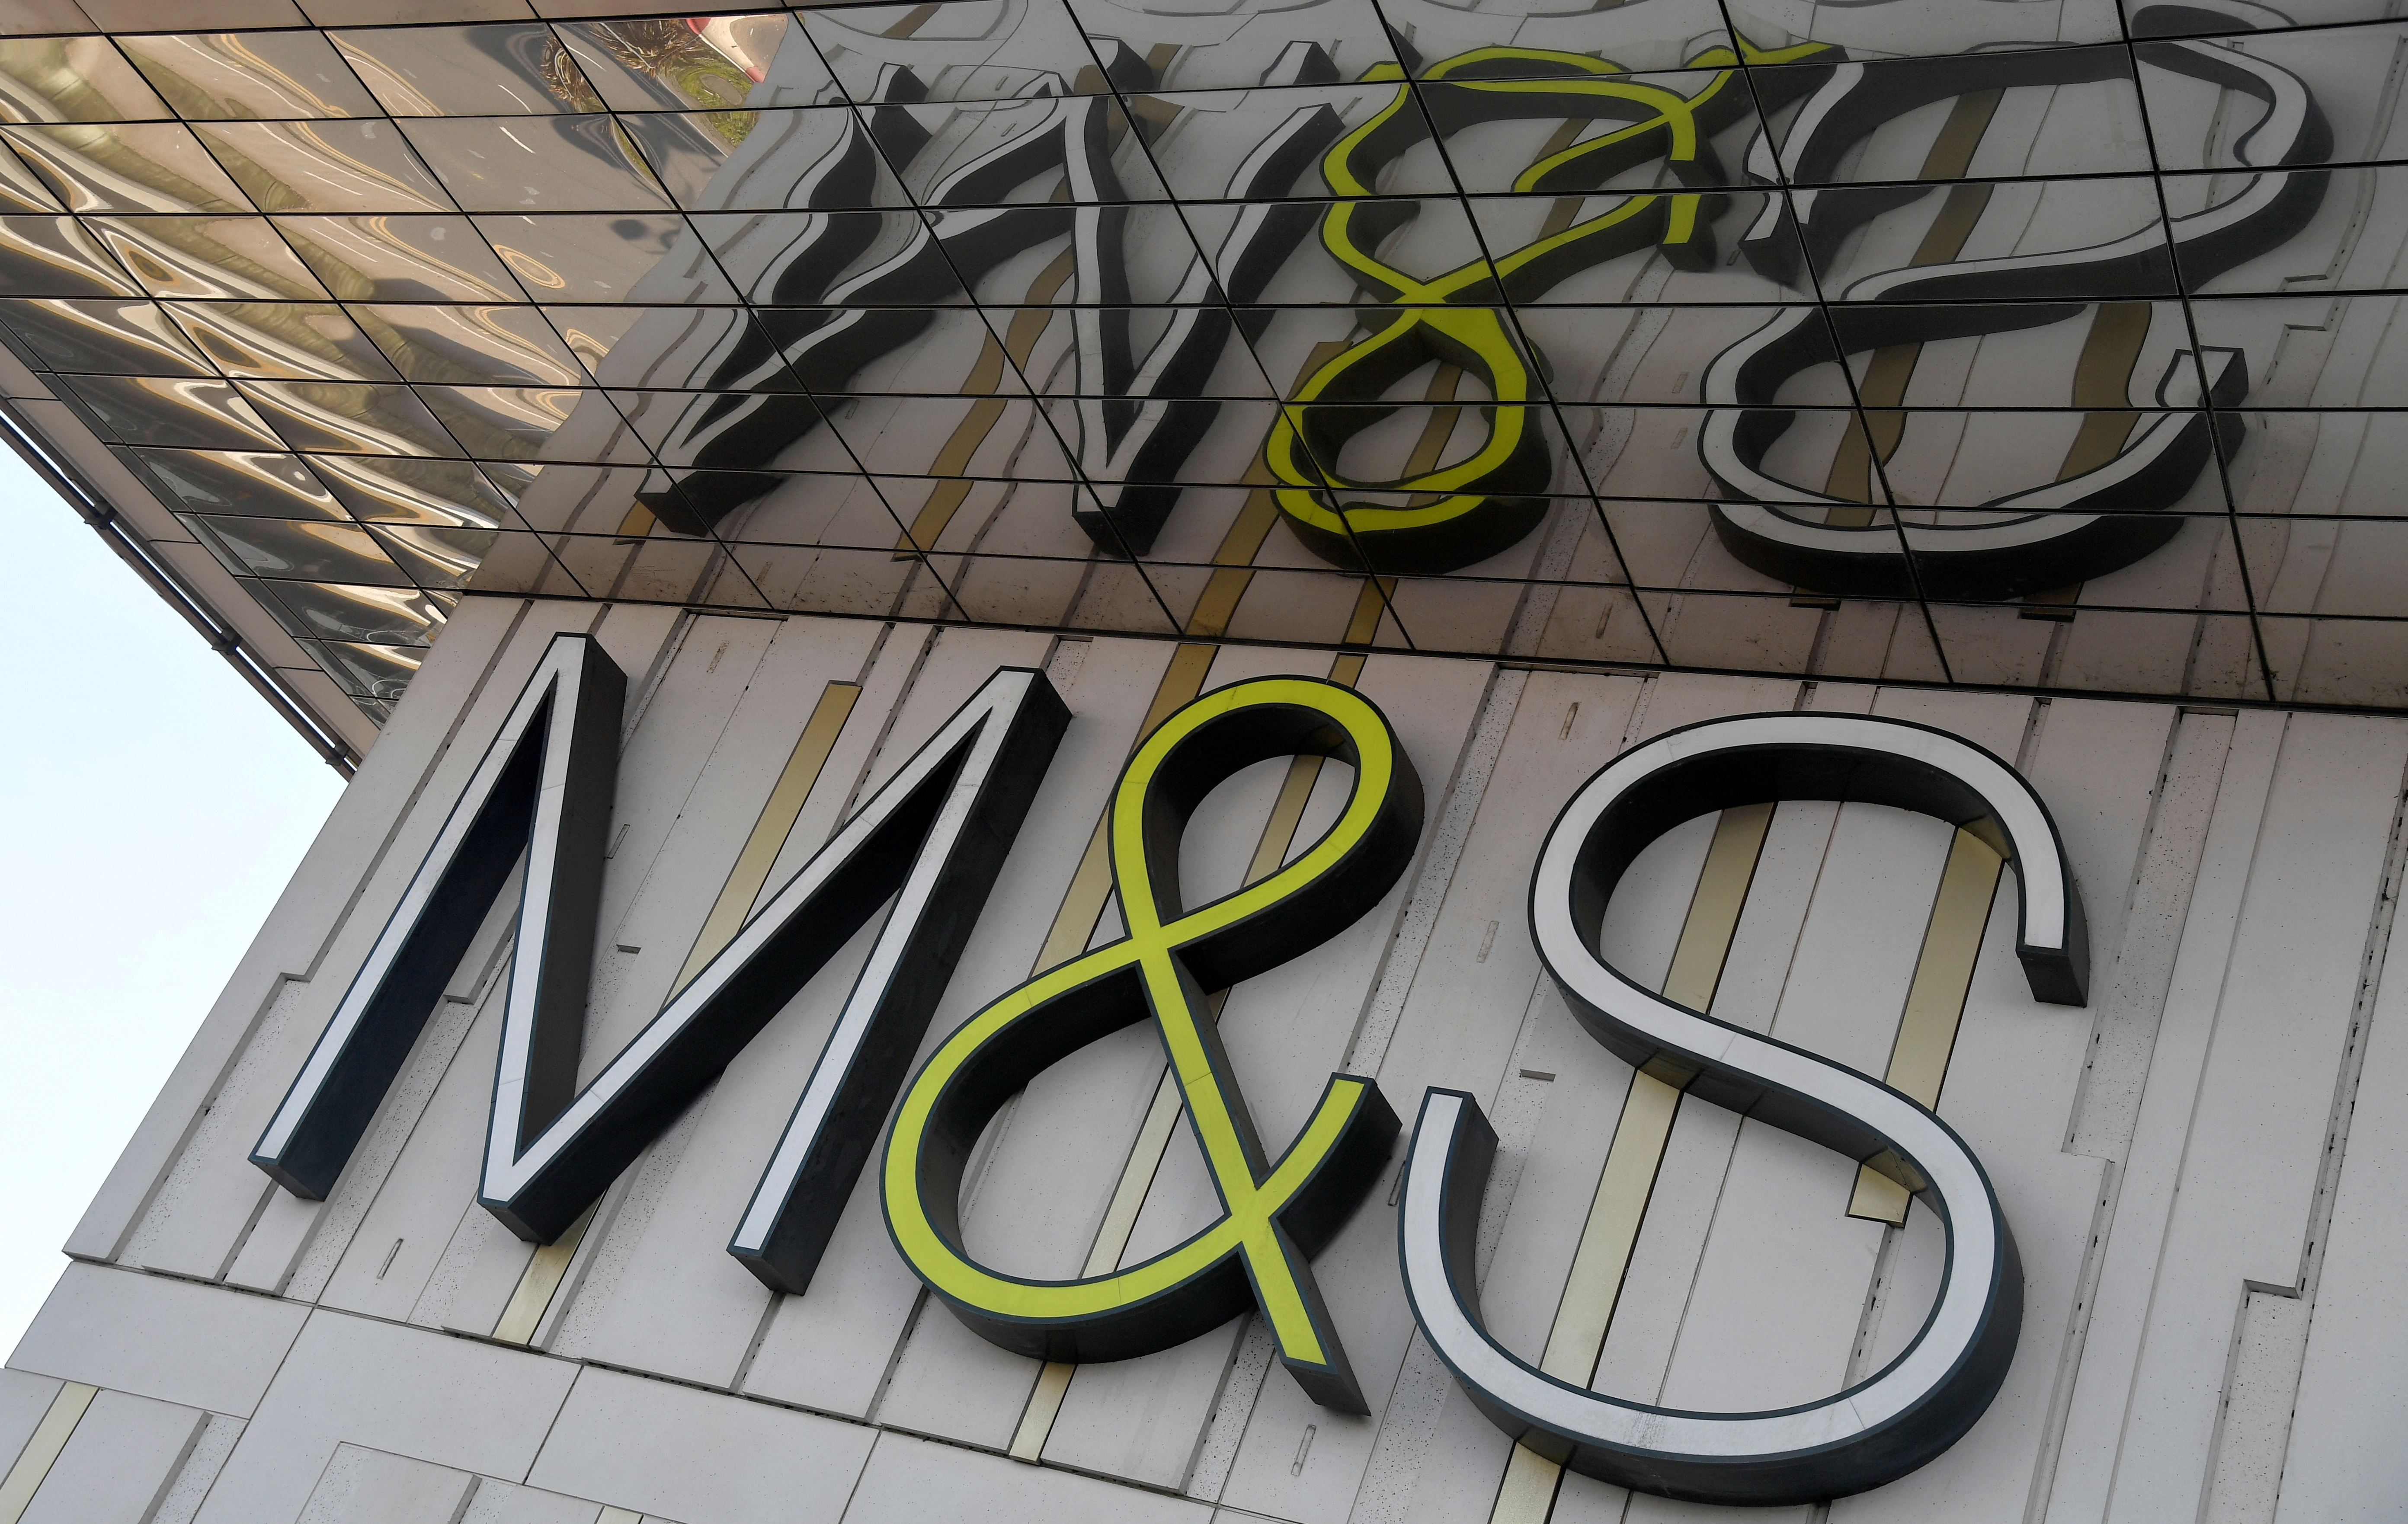 M&S and Primark owner in investor spotlight over consumer spending